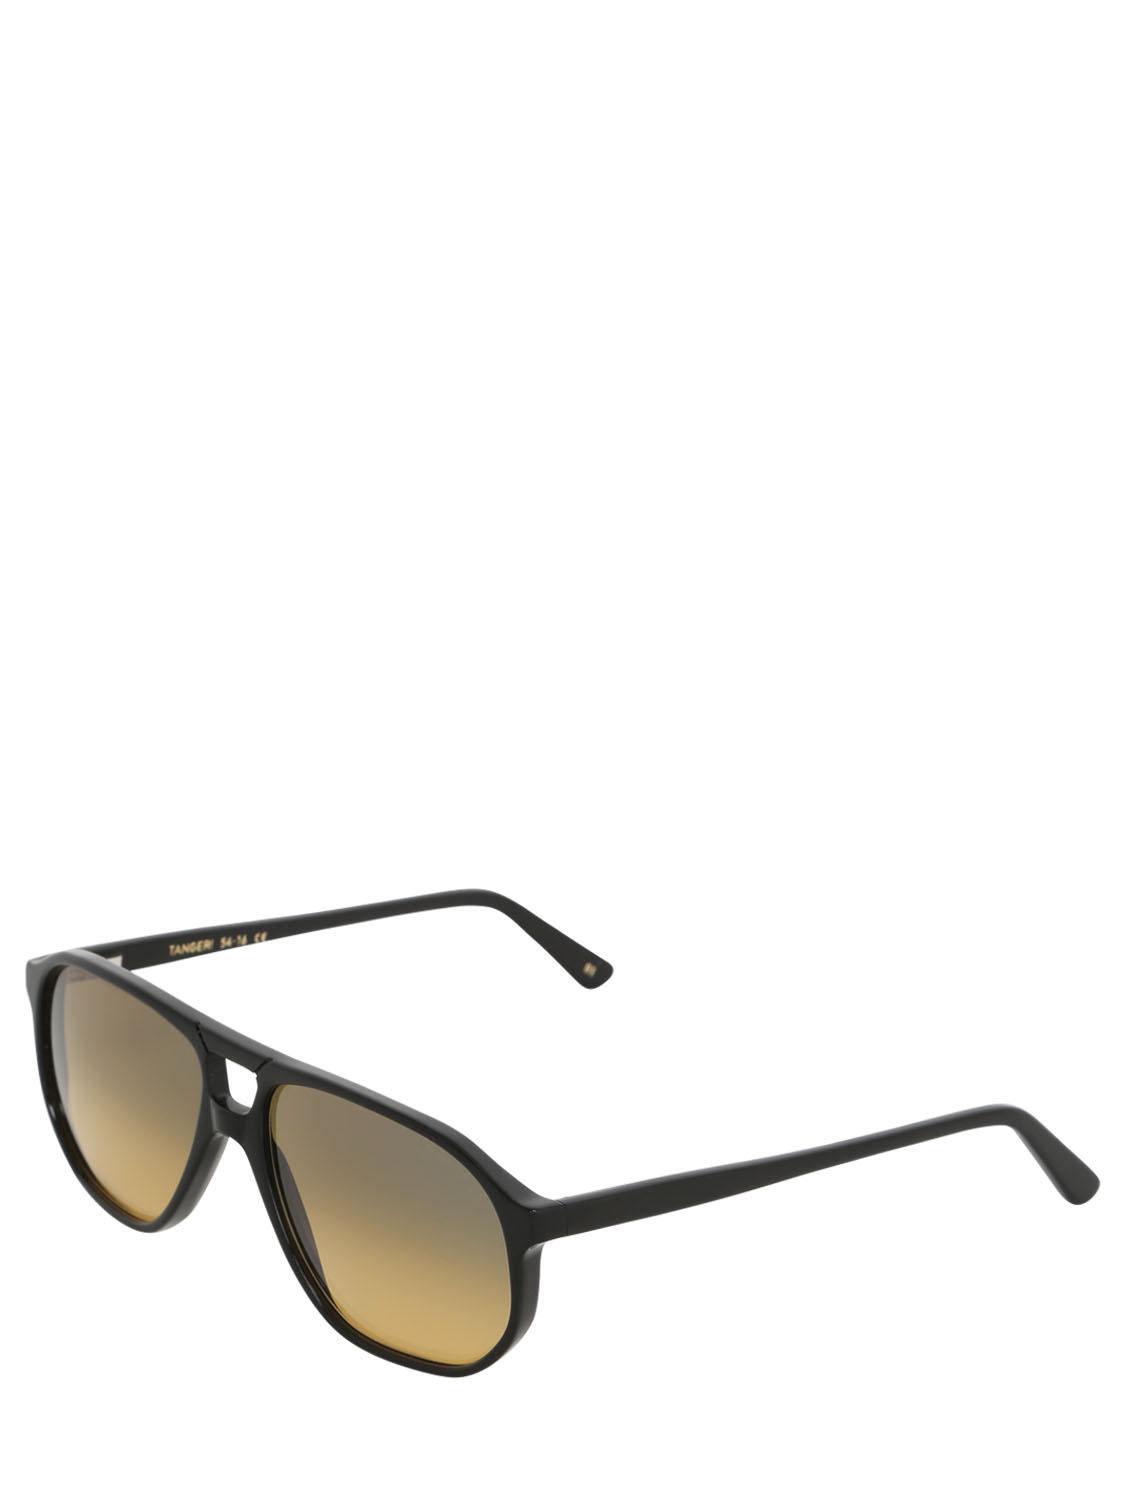 Lyst Lgr Tangeri Acetate Sunglasses In Black For Men